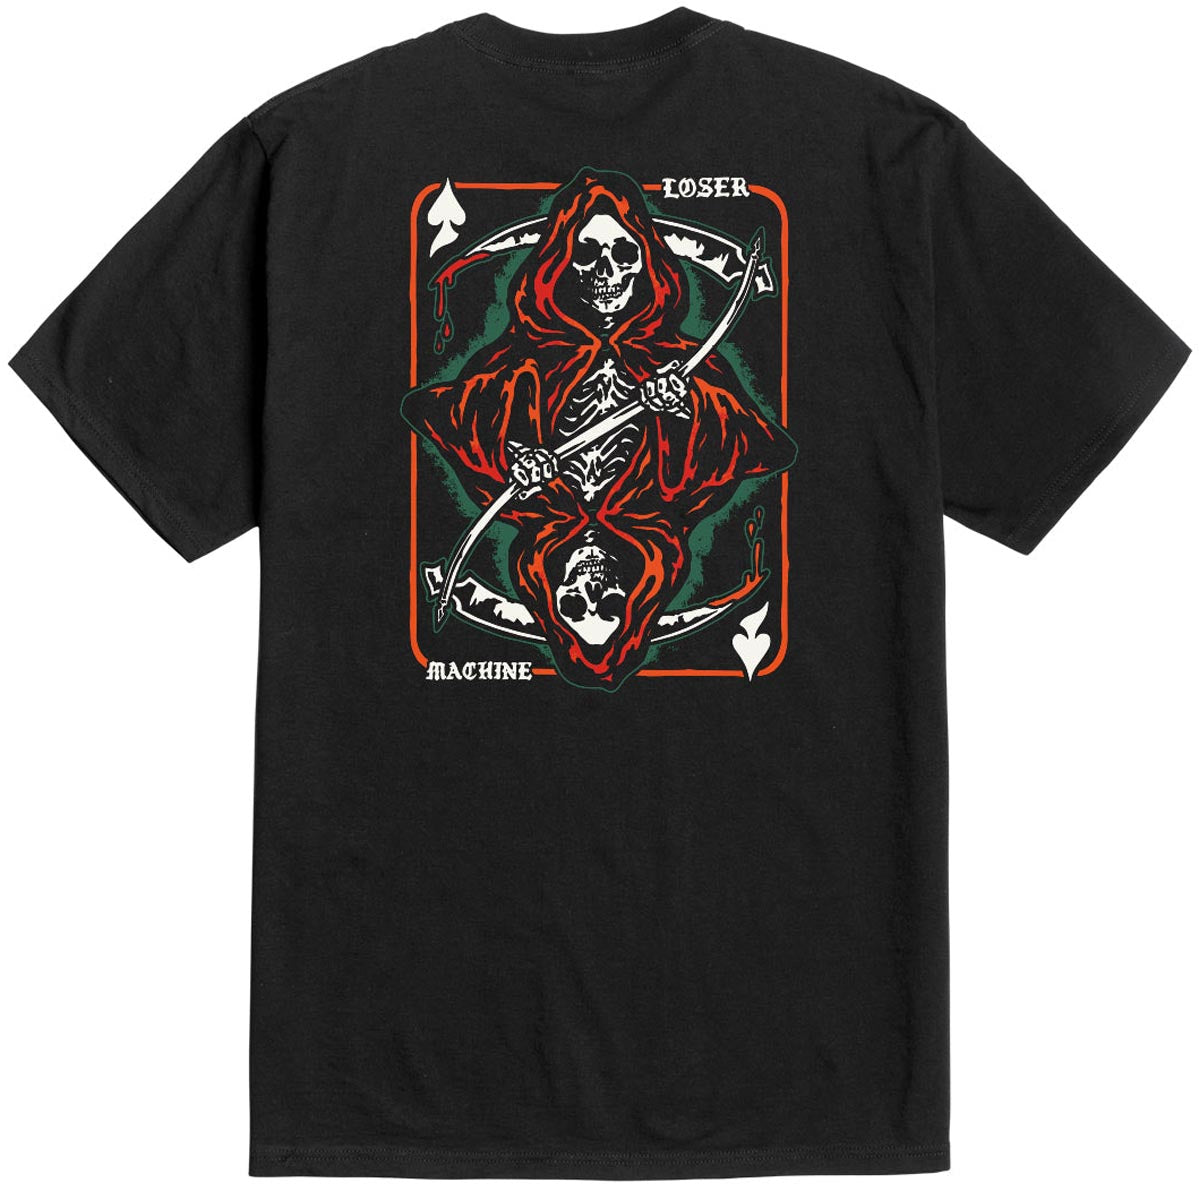 Loser Machine Spade Glow Long Sleeve T-Shirt - Black image 1